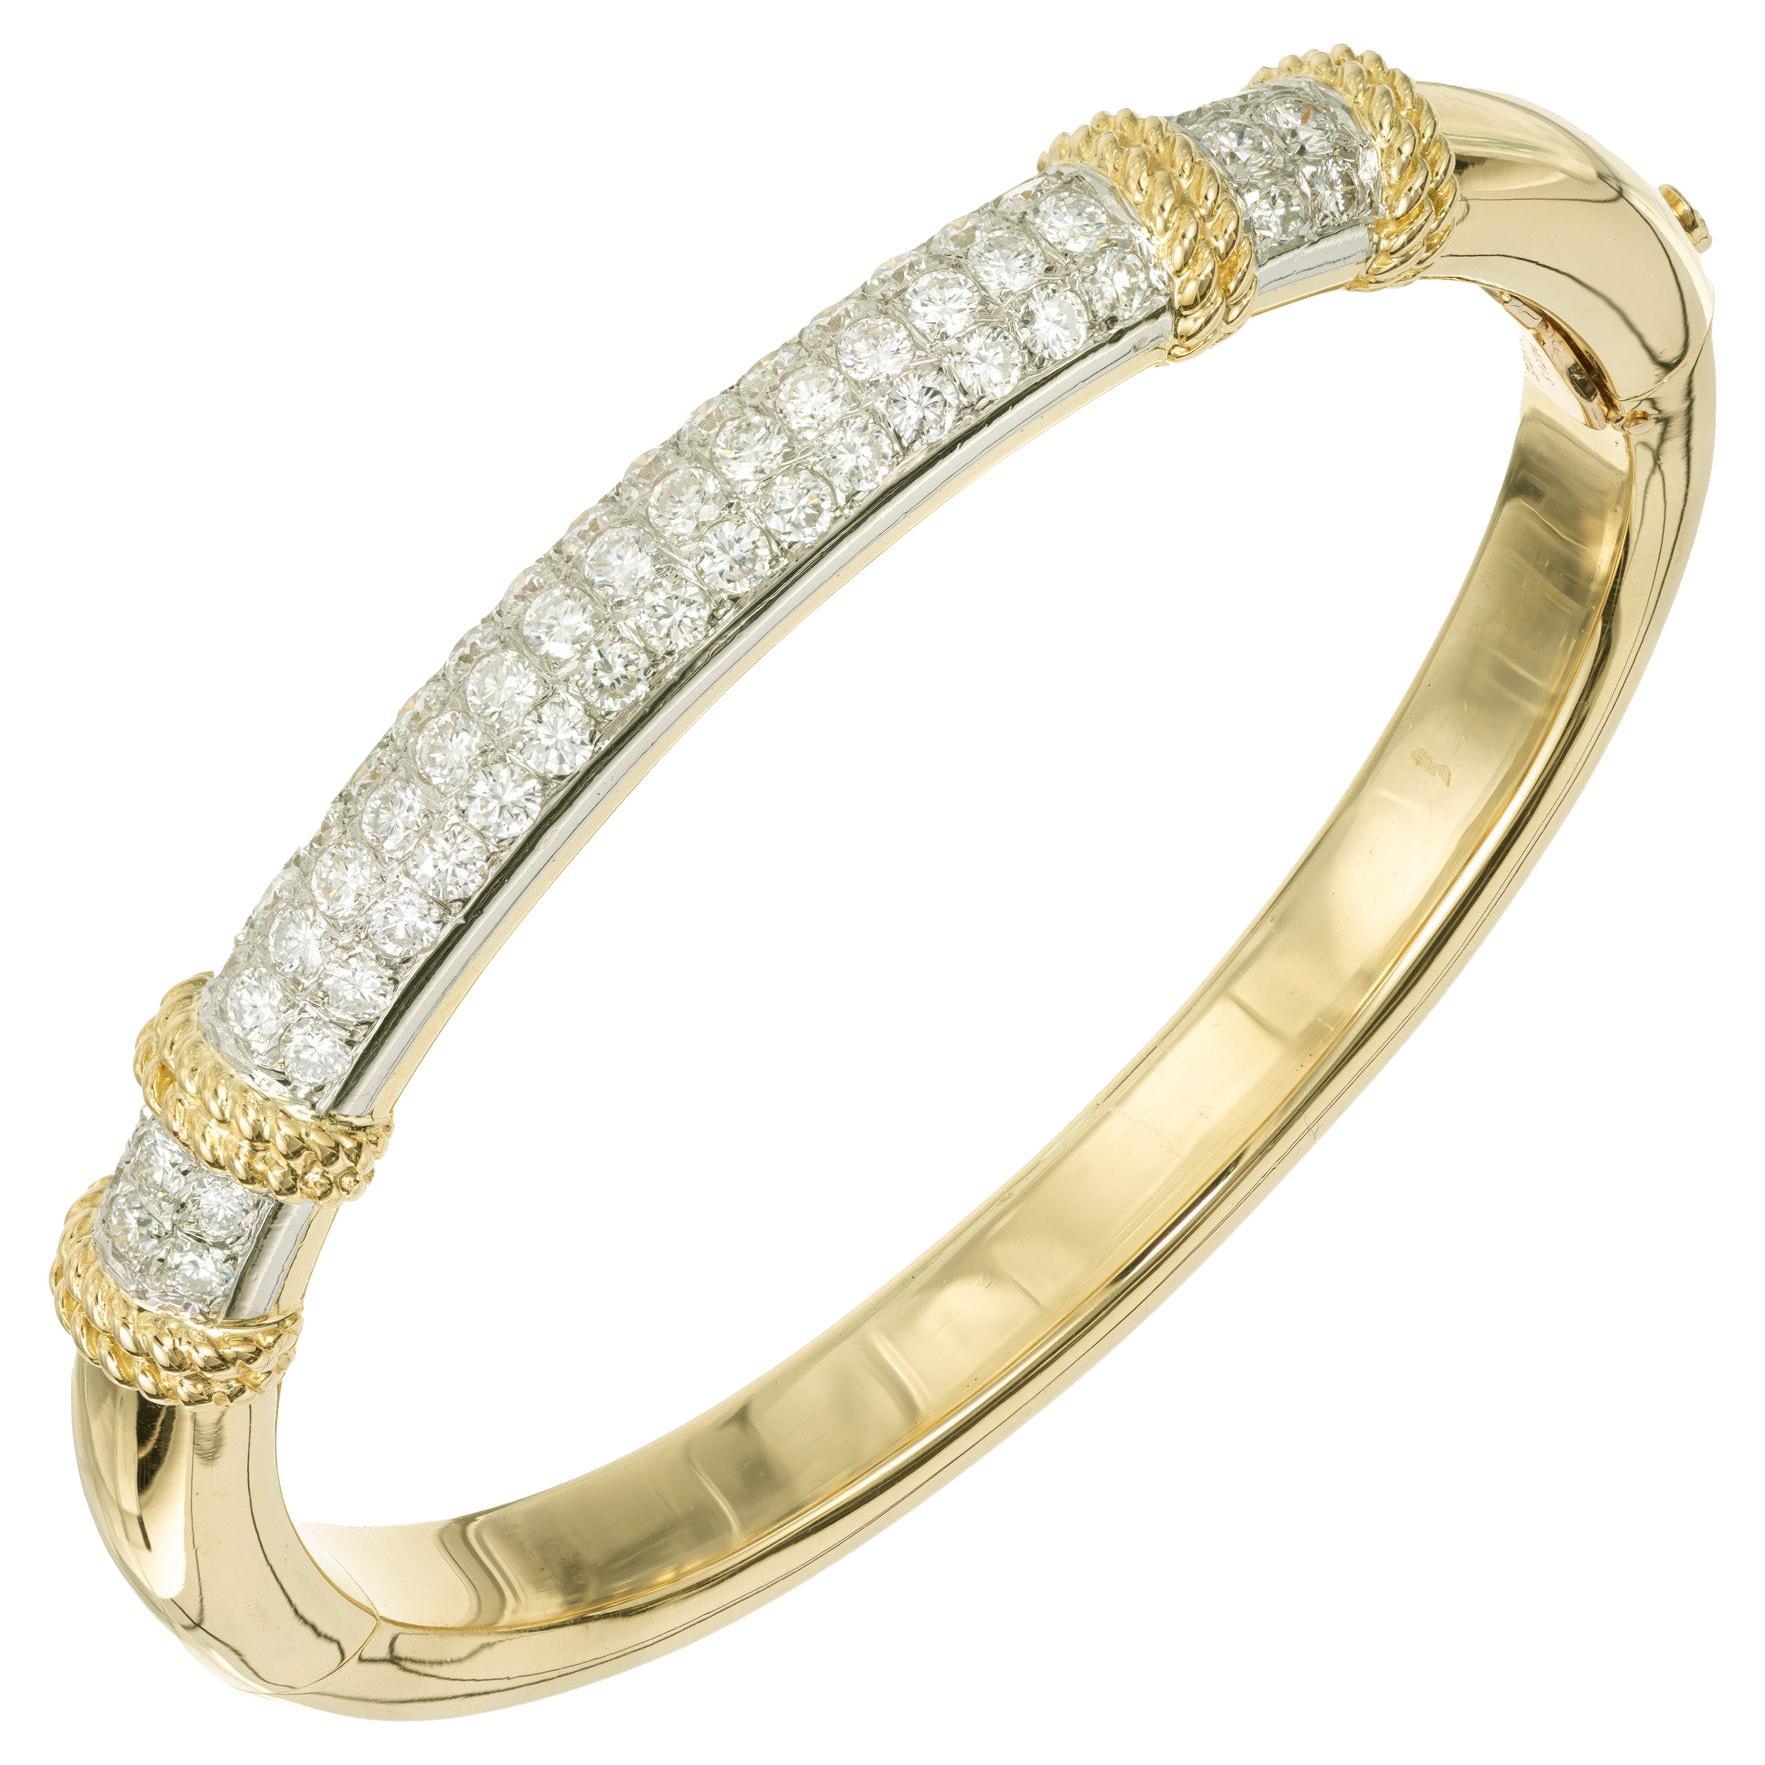 Fred of Paris 2.28 Carat Diamond Two Tone Gold Bangle Bracelet